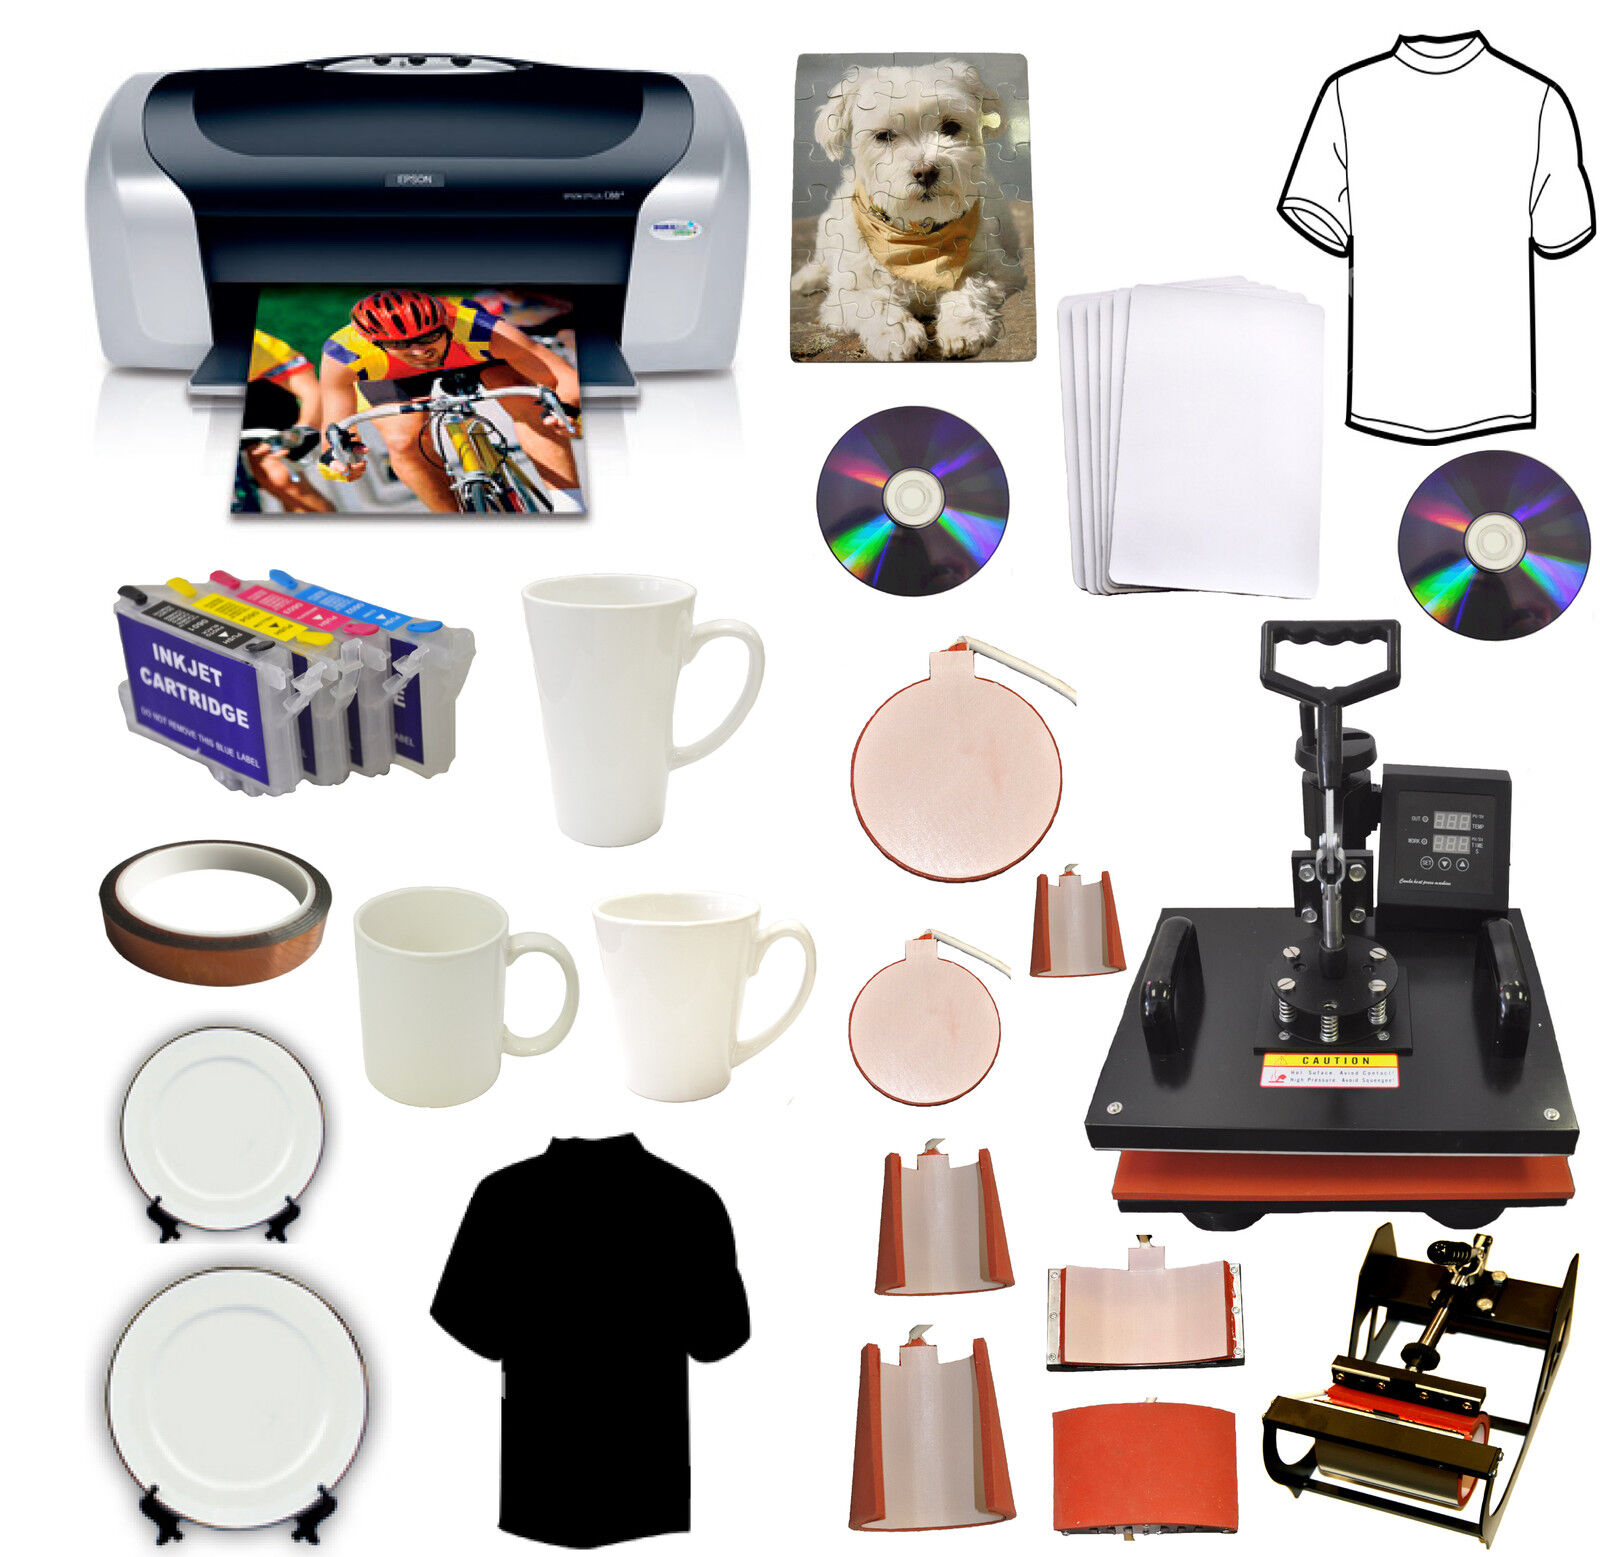 8in1Heat Press,Photo Printer,Cartridges,T-shirts,Mugs,Hat,Plate,iPhone,Samsung